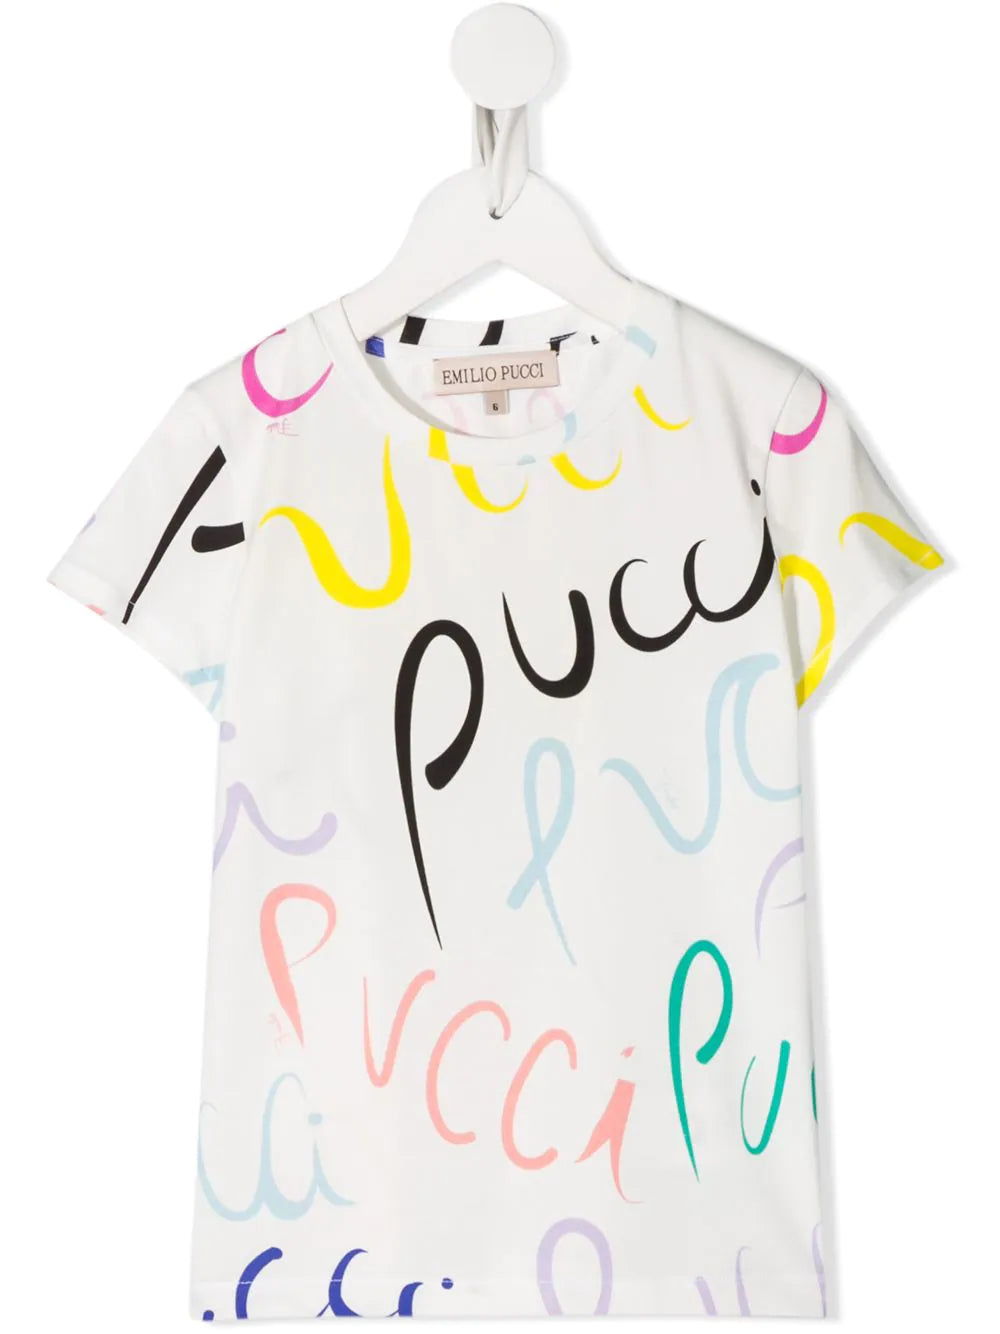 EMILIO PUCCI all over logo print t-shirt white - MAISONDEFASHION.COM